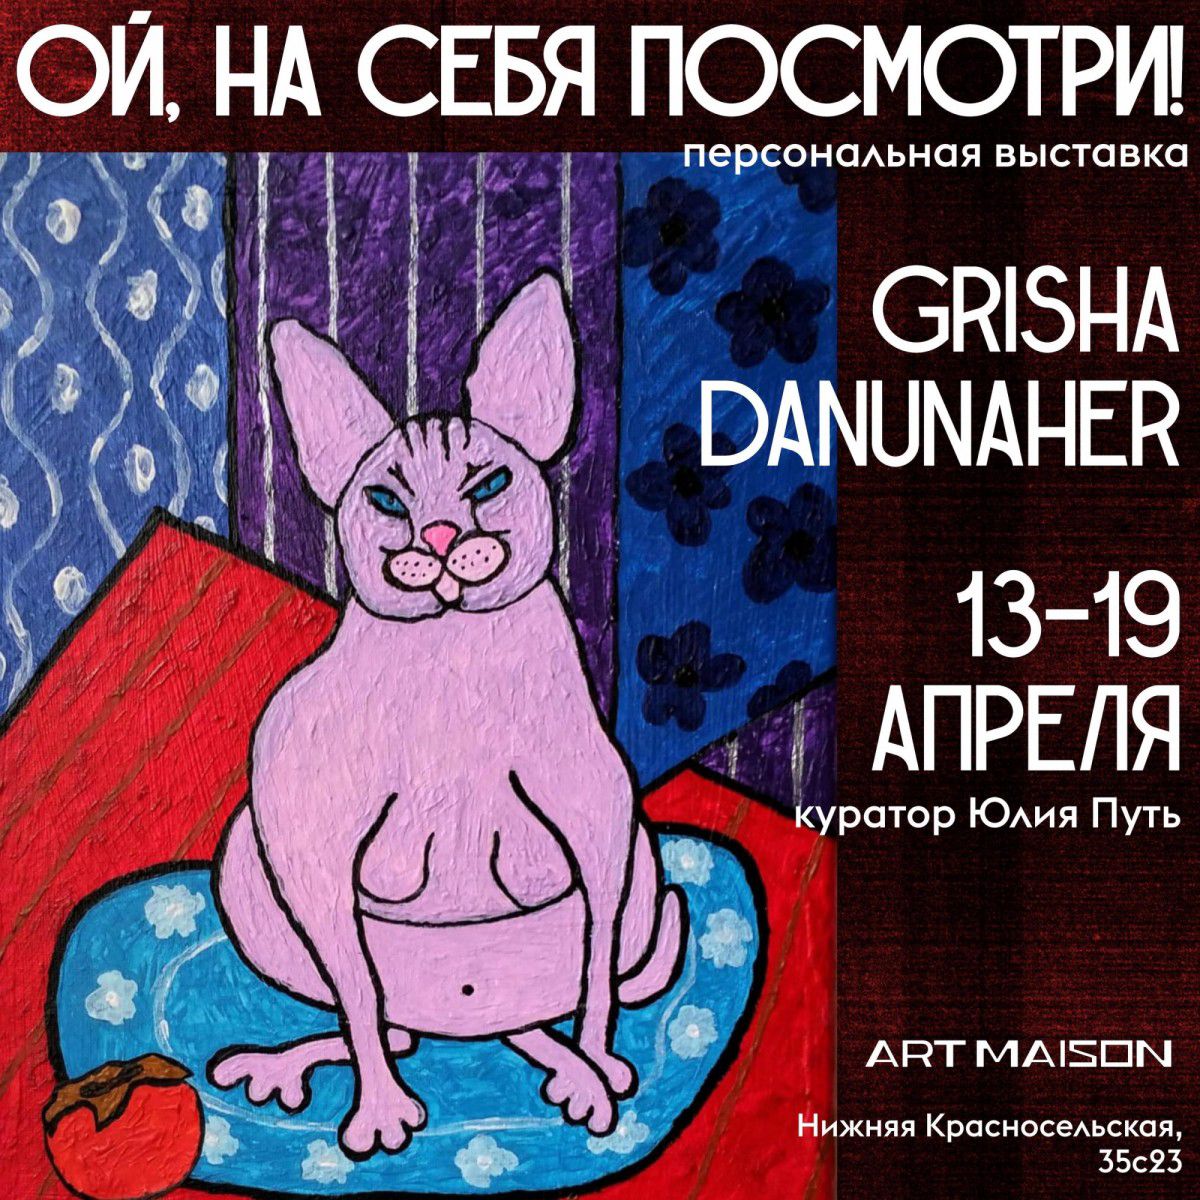 Grisha Danunaher's exhibition 